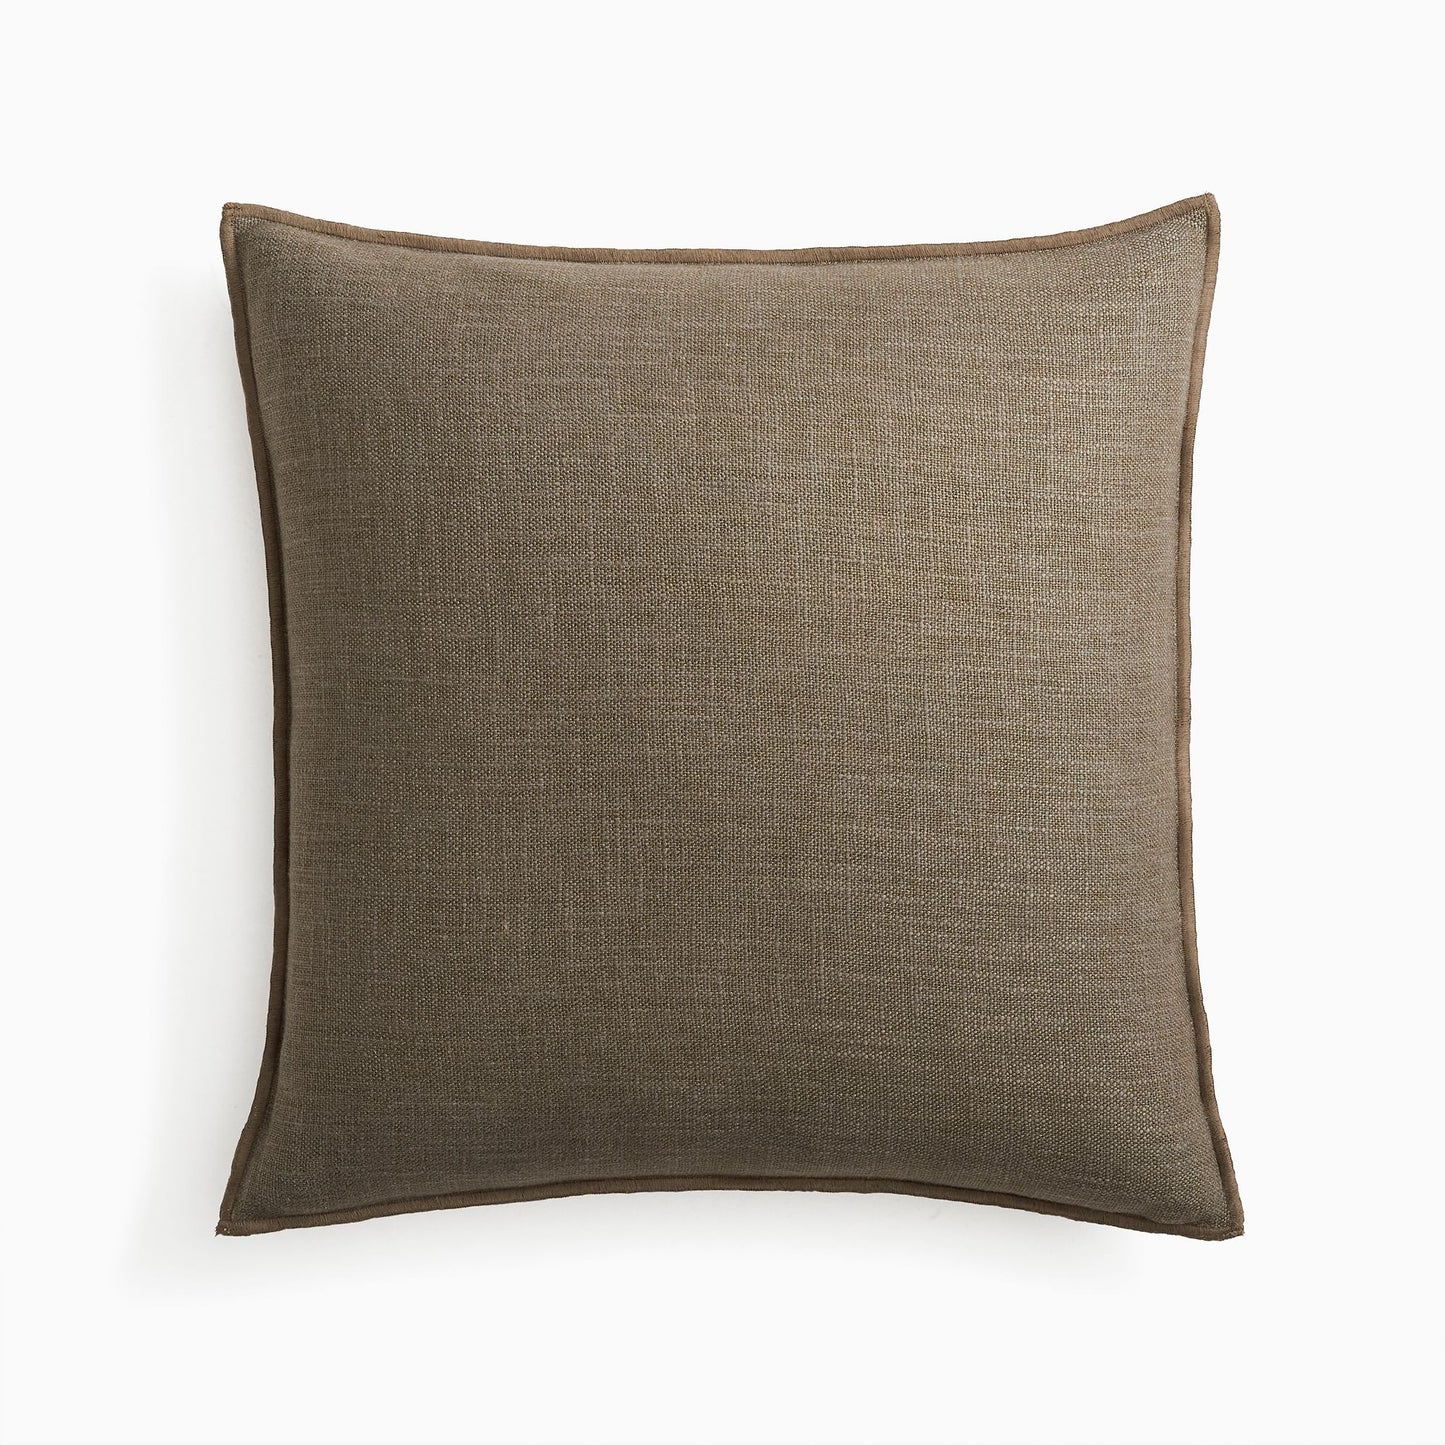 West Elm - Classic Linen Pillow Cover 20x20 (With Down Alternative Pillow Insert) - Decorative Pillow